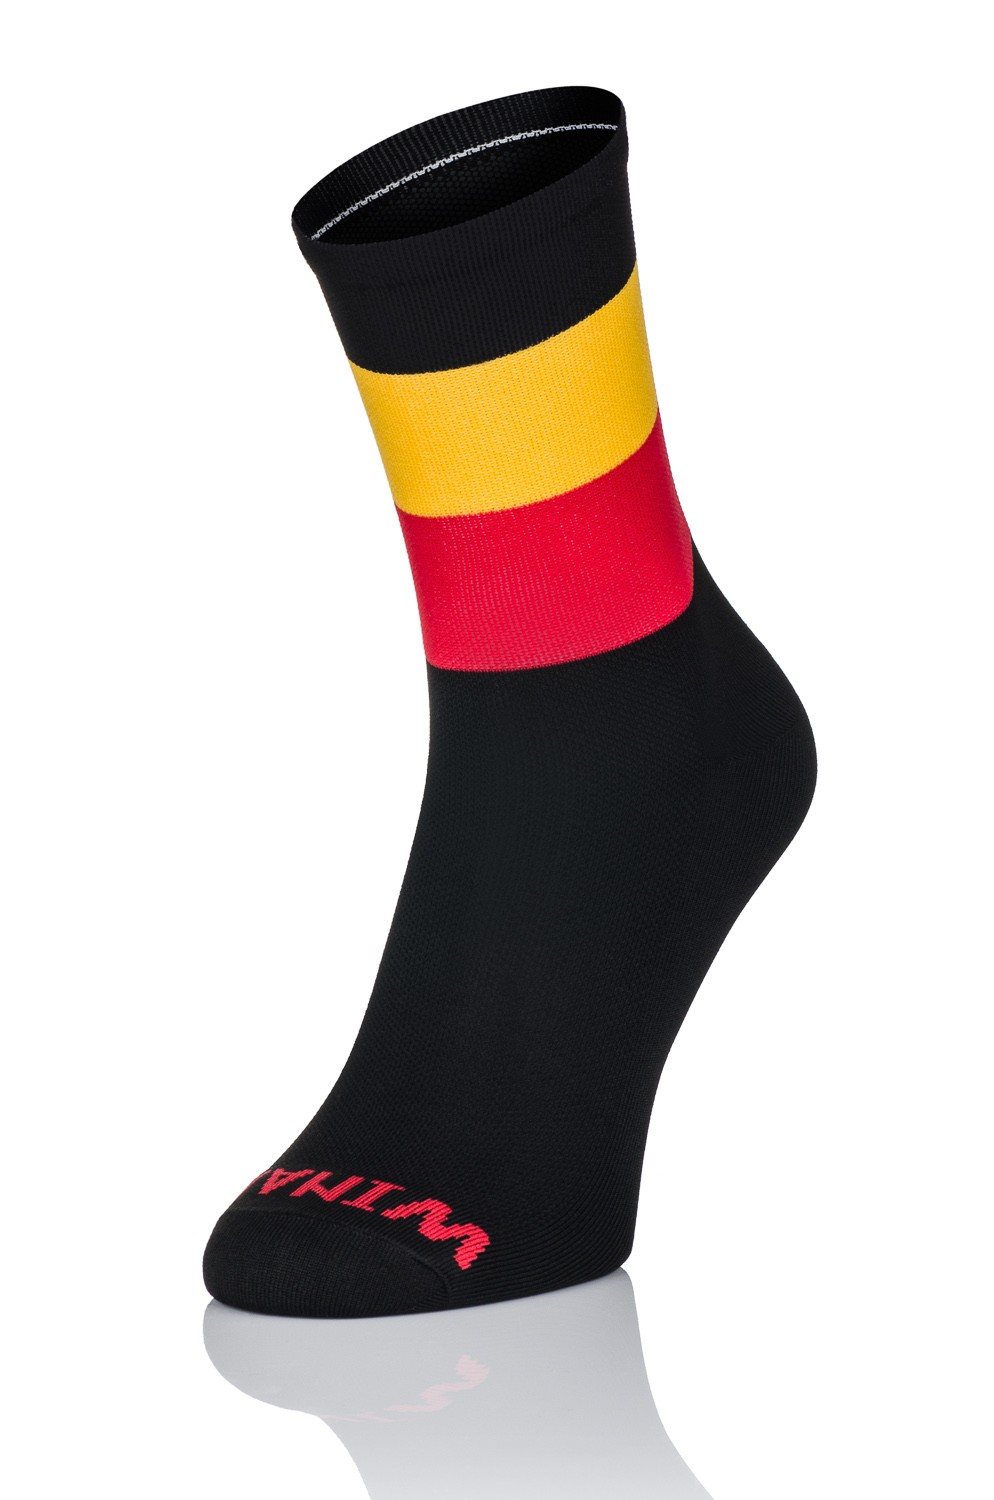 Winaar Belgium Cycling Socks - Winaar.nl Socks - Socks - Manieu Sports ...